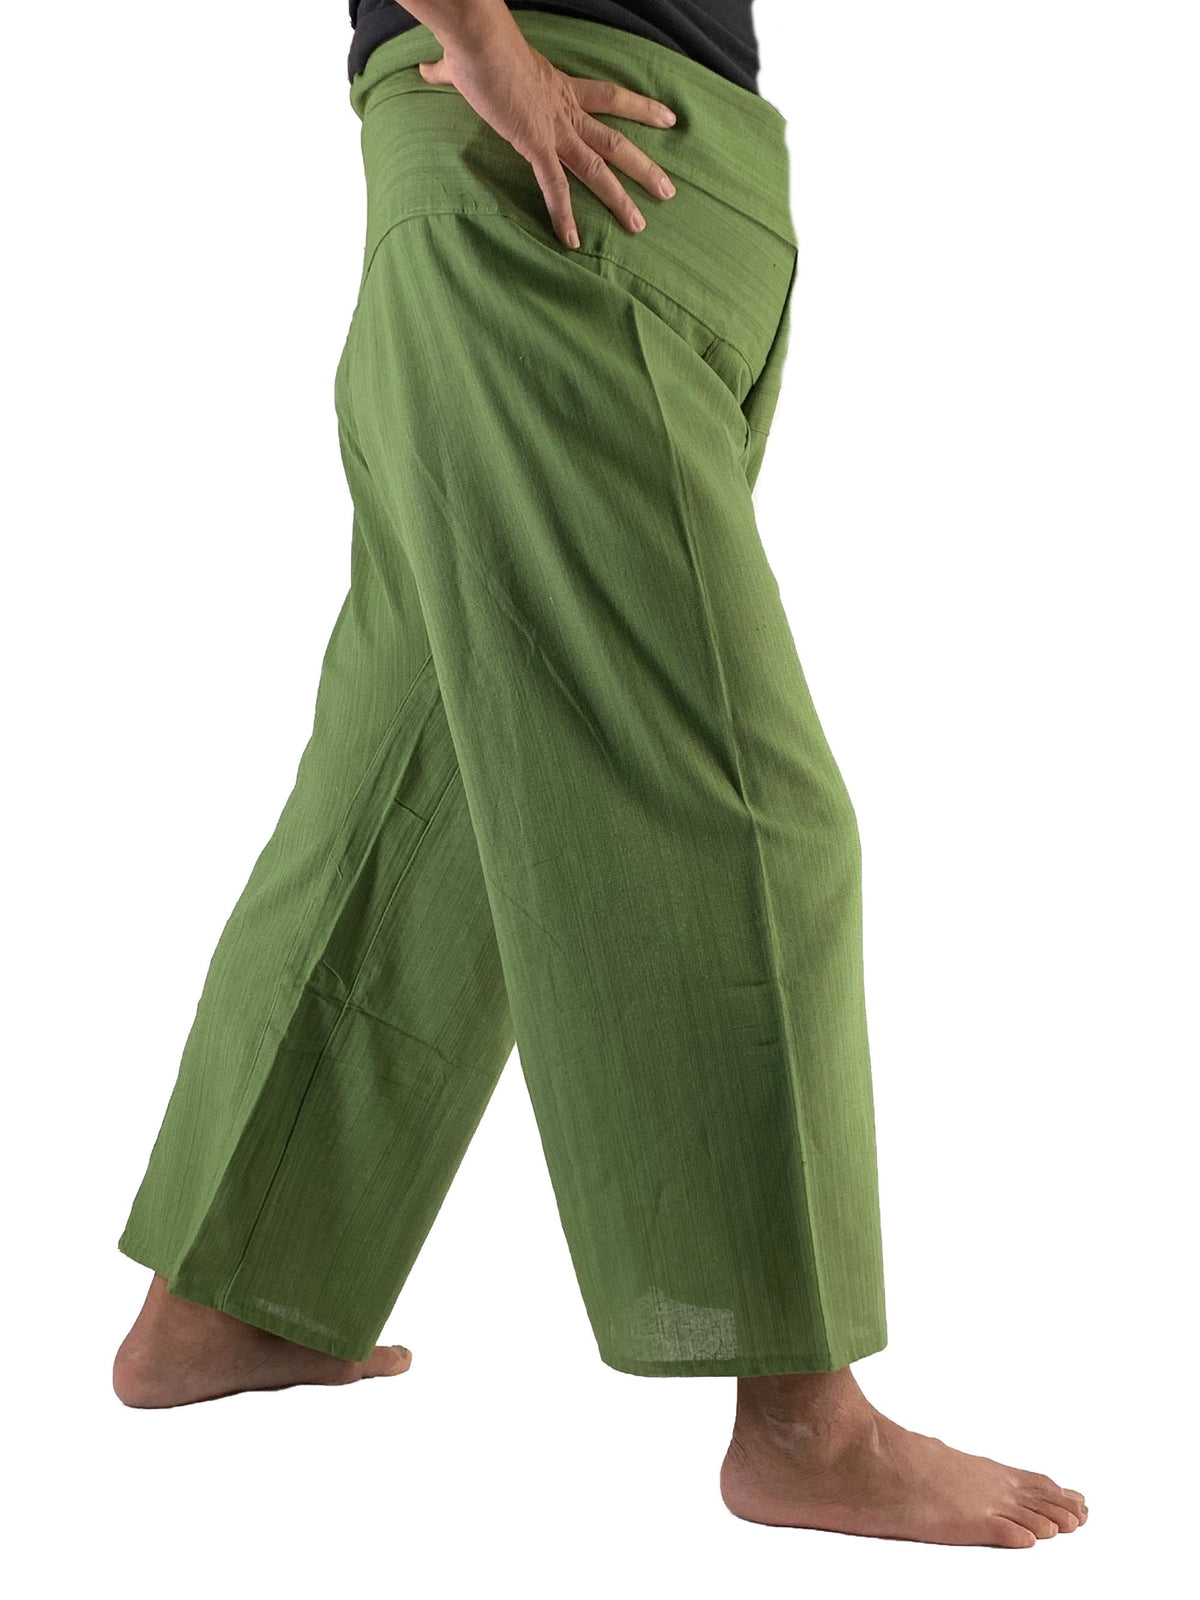 Fisherman Pants Lime Green - Love Quality